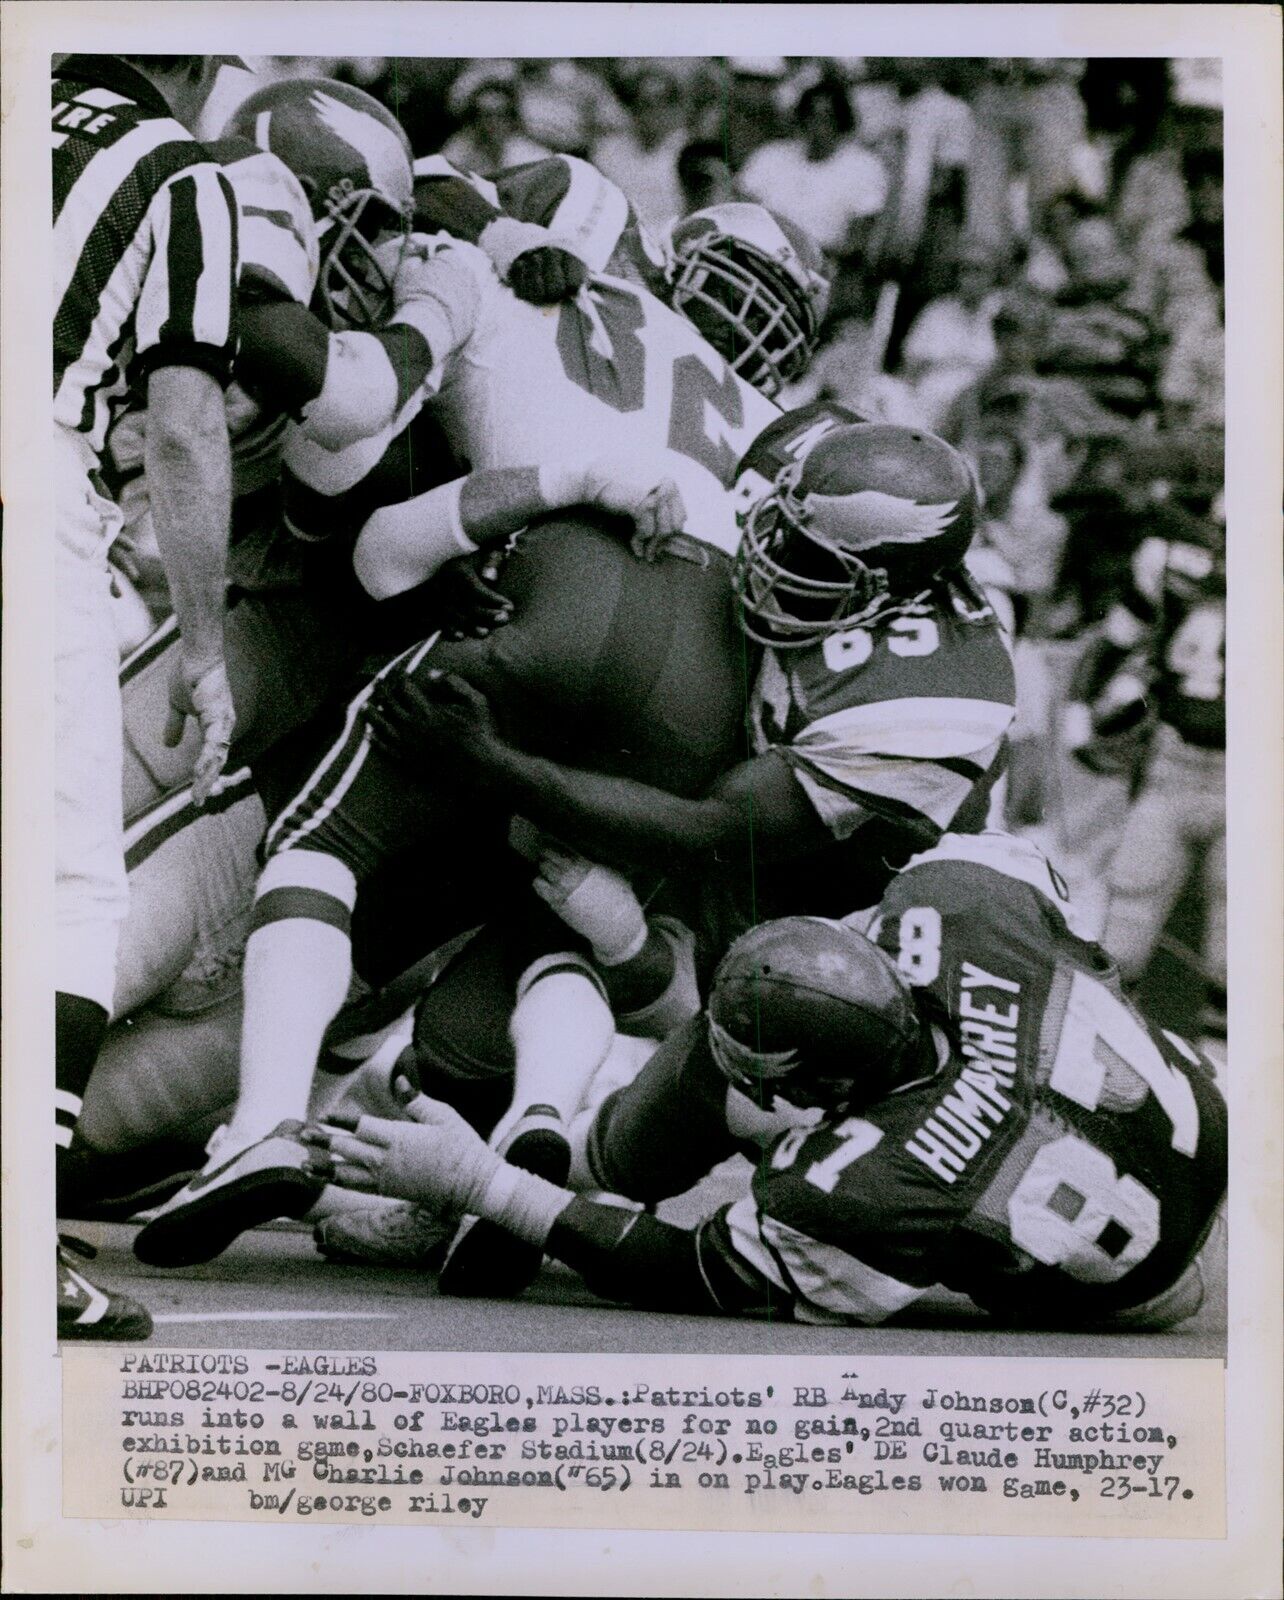 LG767 1980 Orig George Riley Photo ANDY JOHNSON New England Patriots vs Eagles